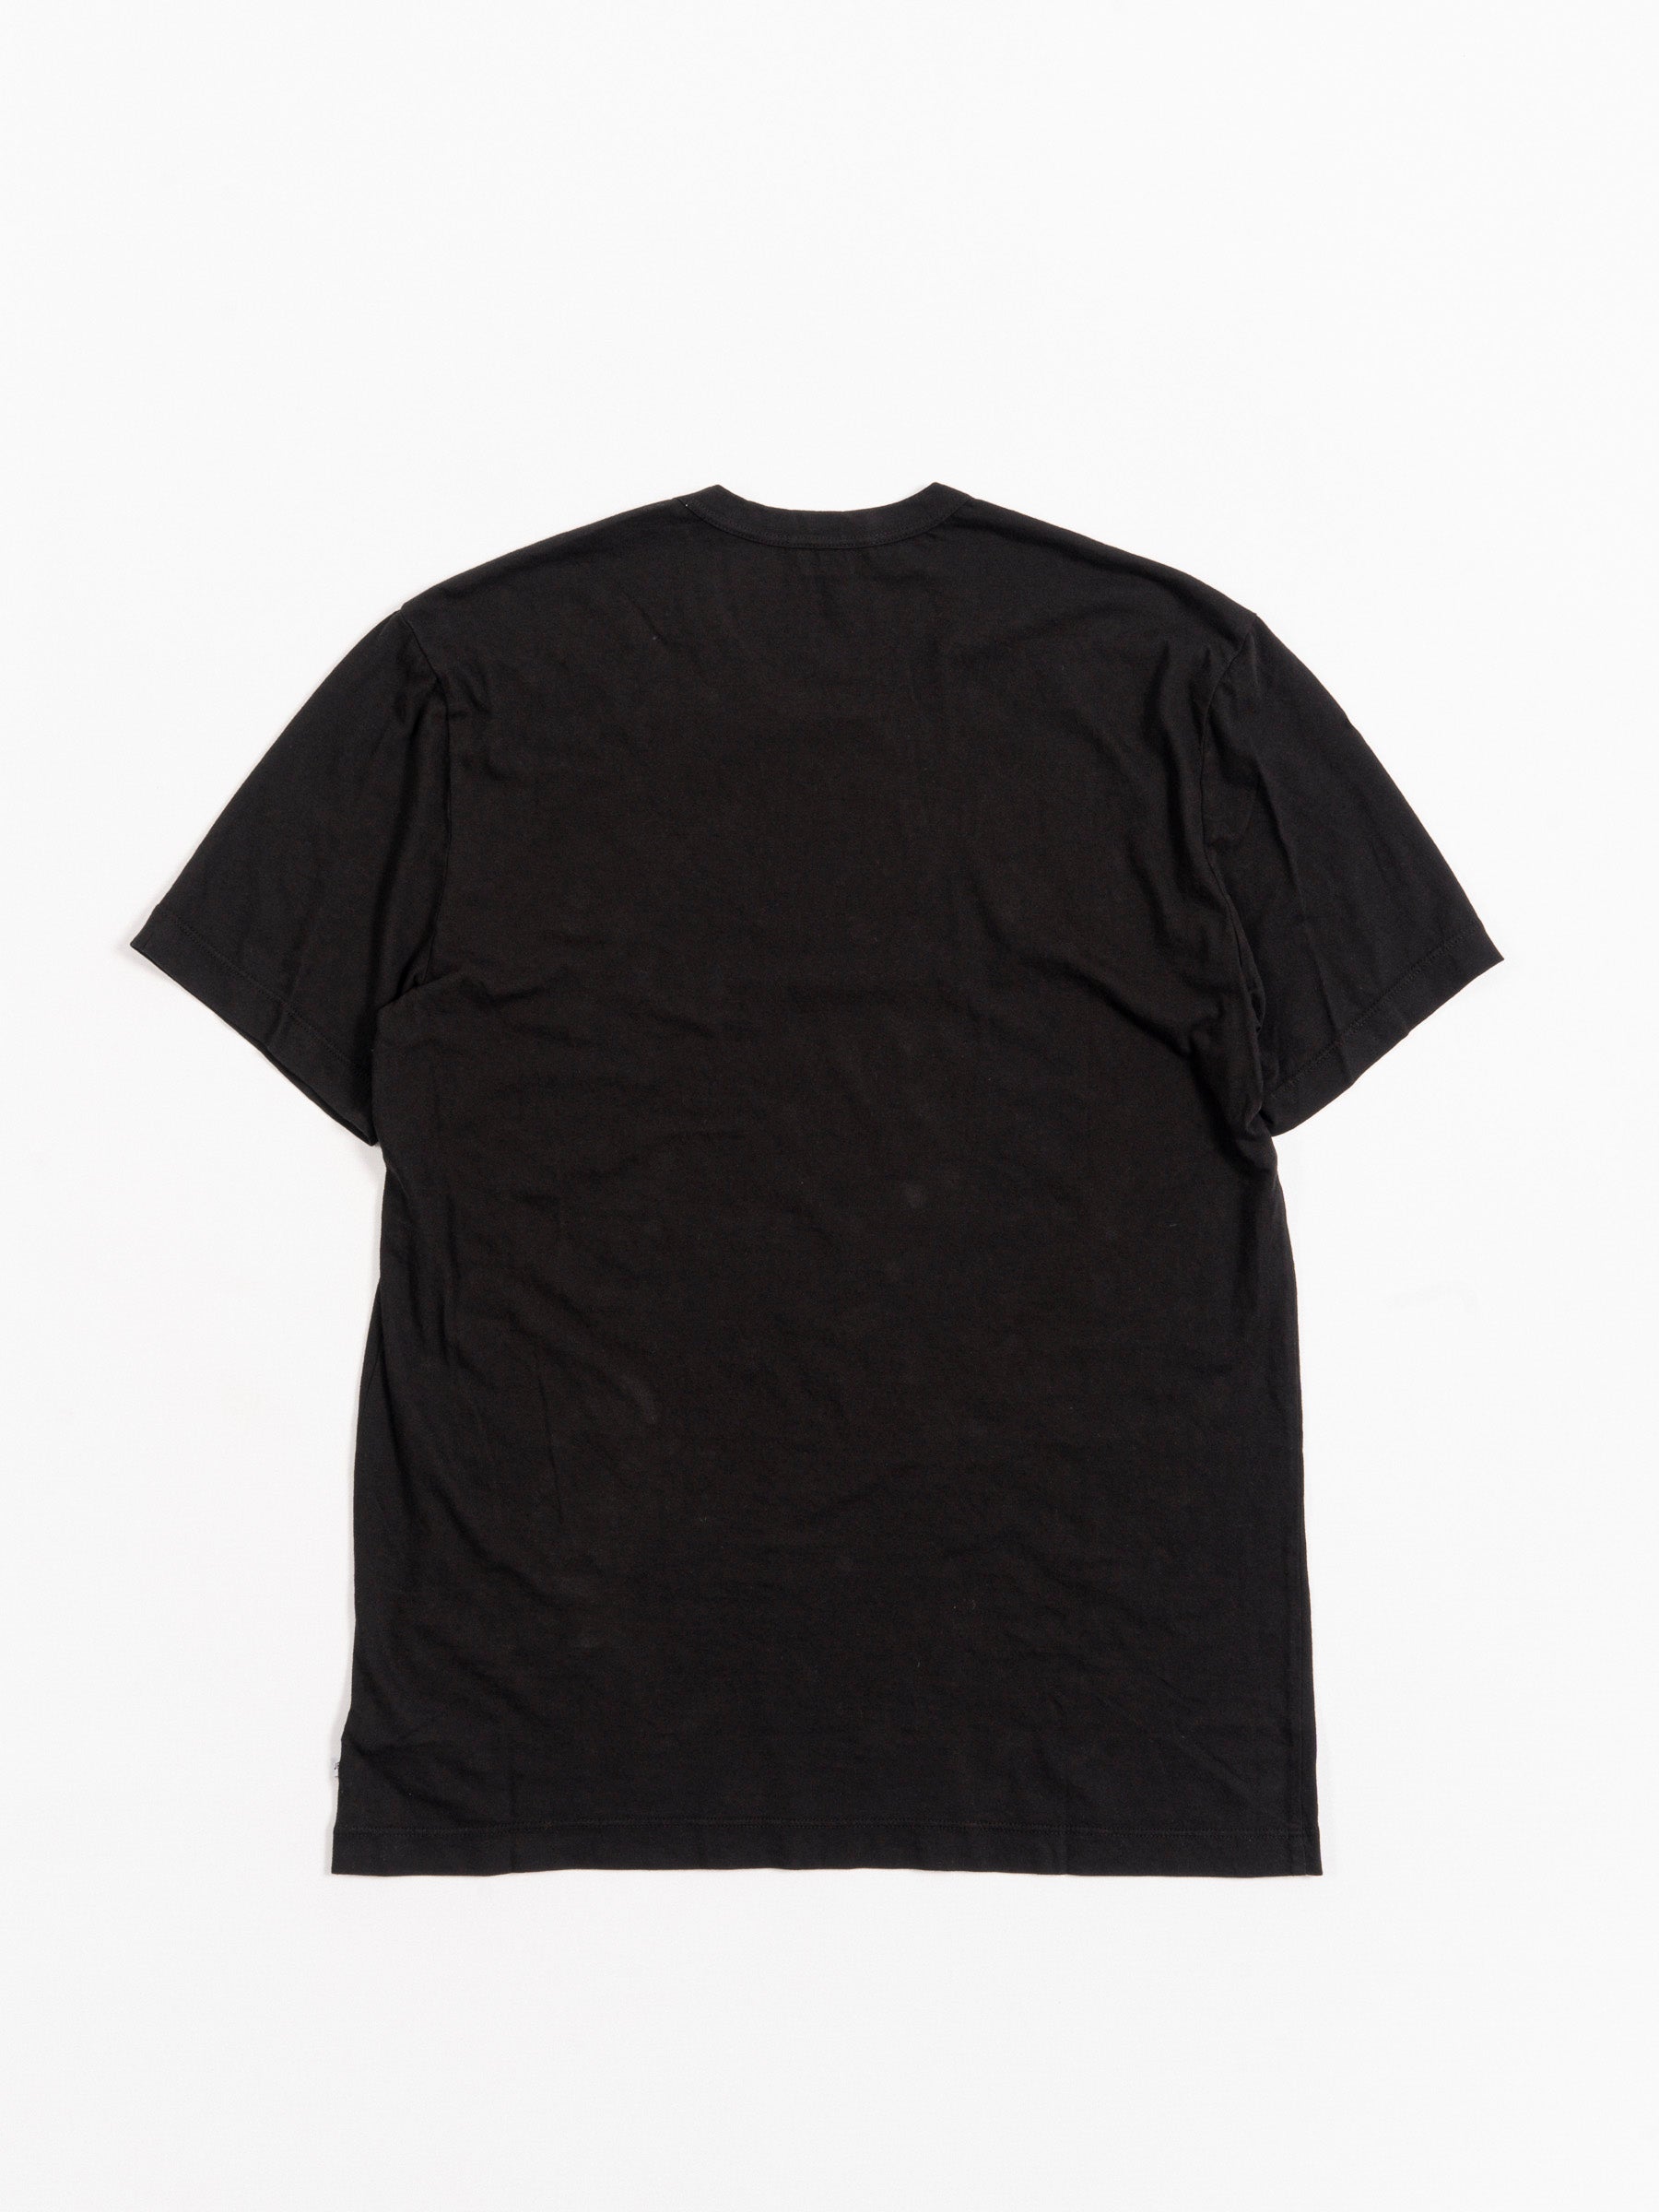 S/S Crew T-Shirt Black